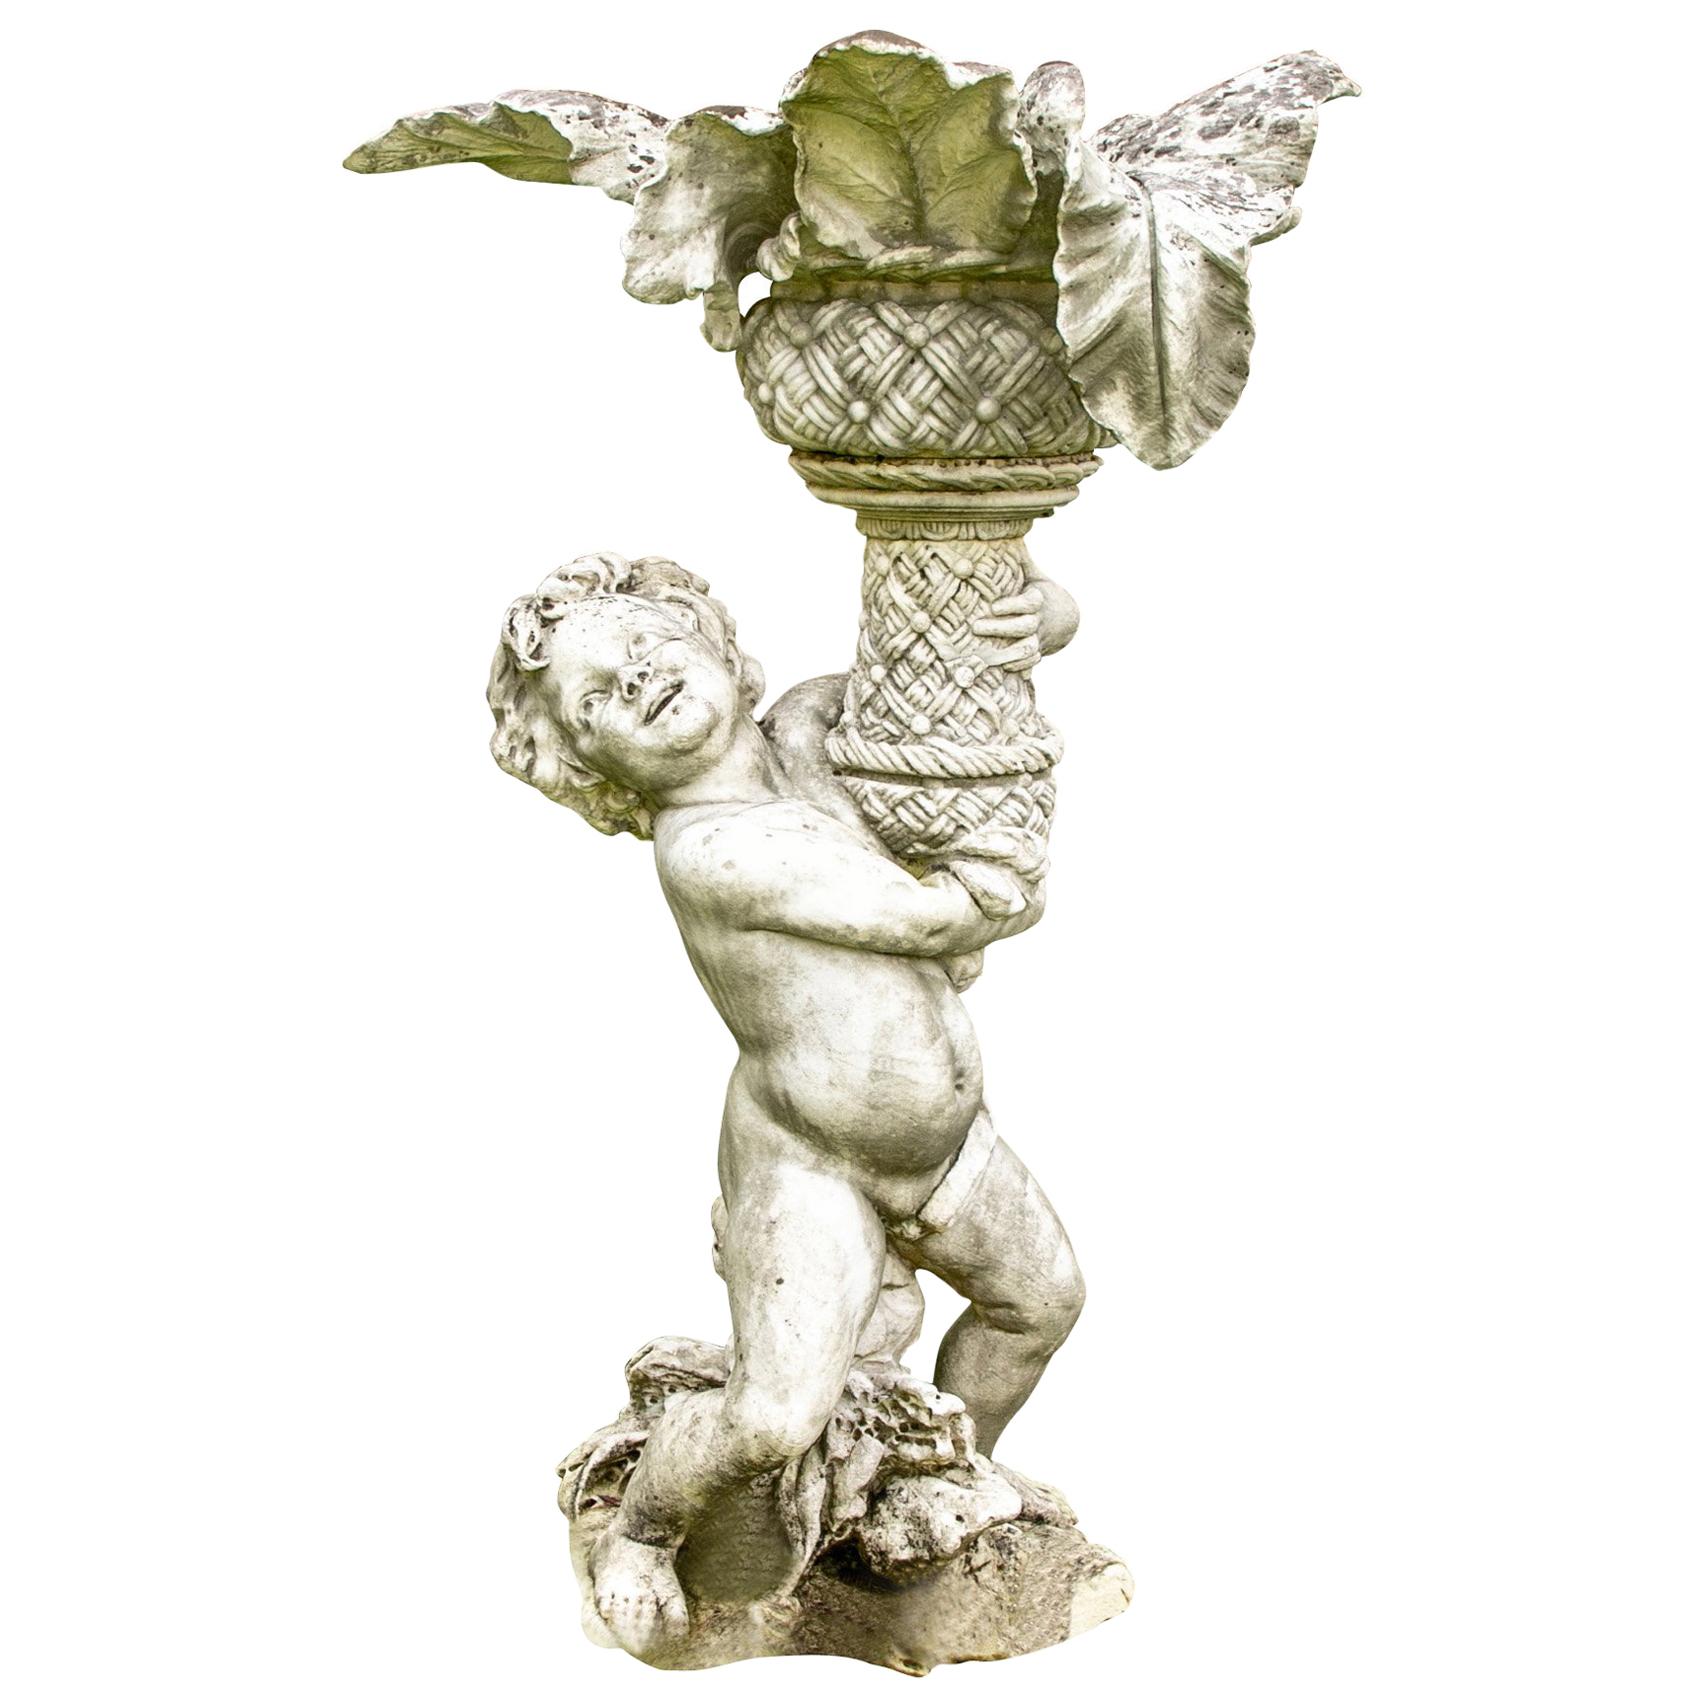 Ancienne figurine de putto de jardin en marbre sculpté